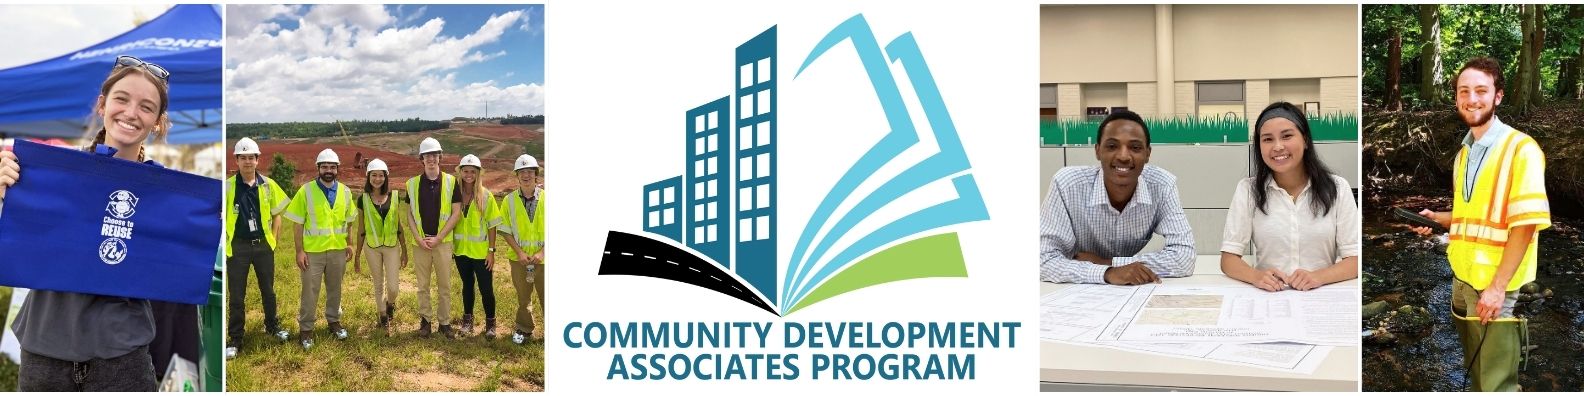 Students and the Community Development Associates Program logo